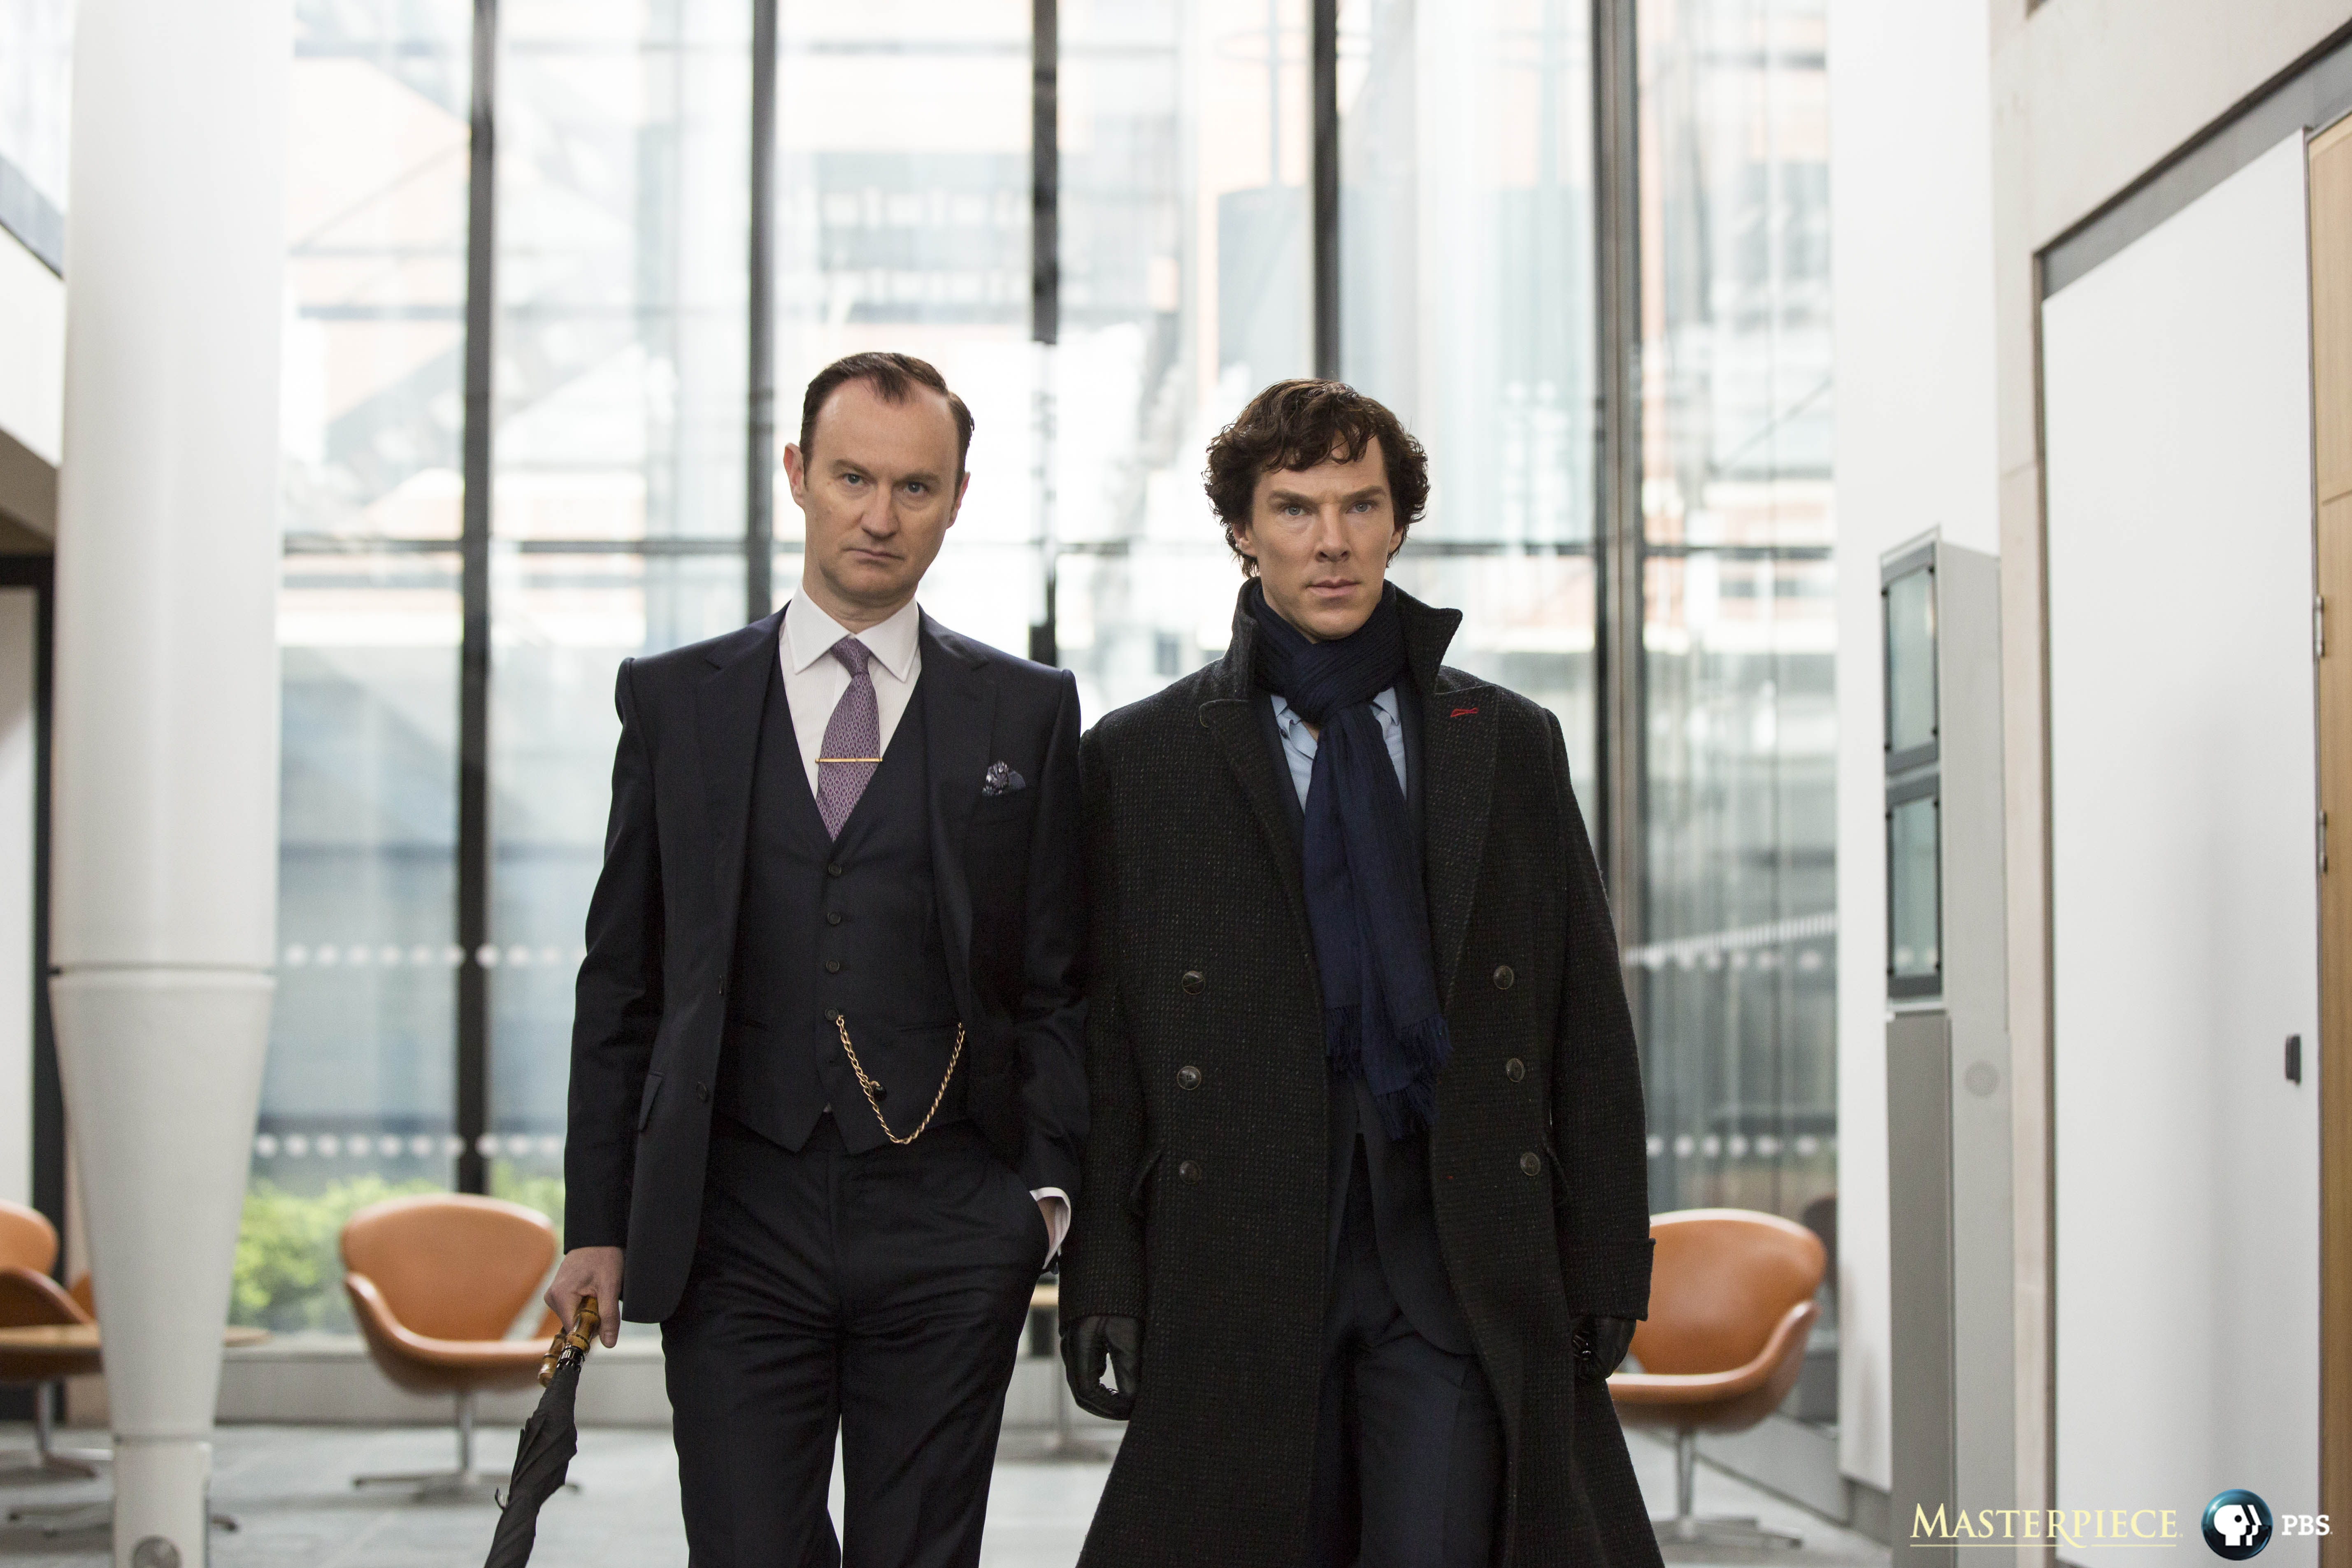 Sherlock, Season 4 premieres January 1, 2017 on MASTERPIECE on PBS. Picture shows: Mycroft Holmes (MARK GATISS) and Sherlock Holmes (BENEDICT CUMBERBATCH)